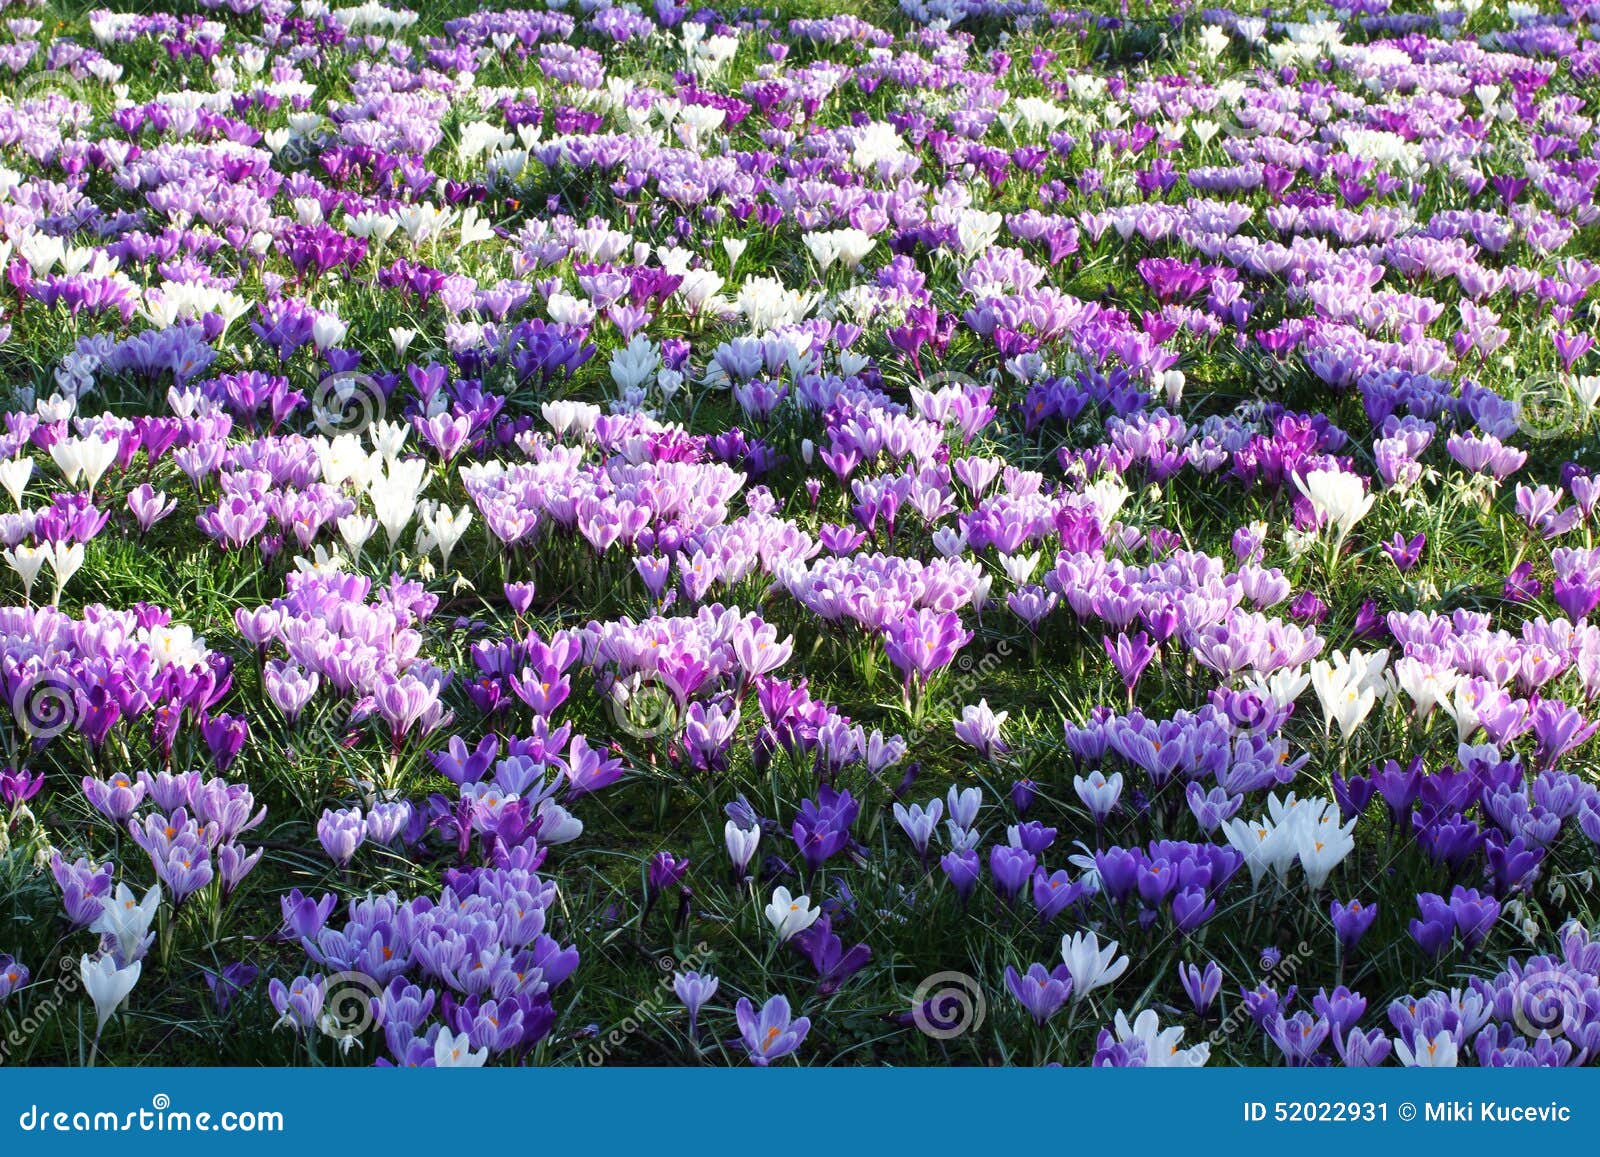 spring flowers purple white field